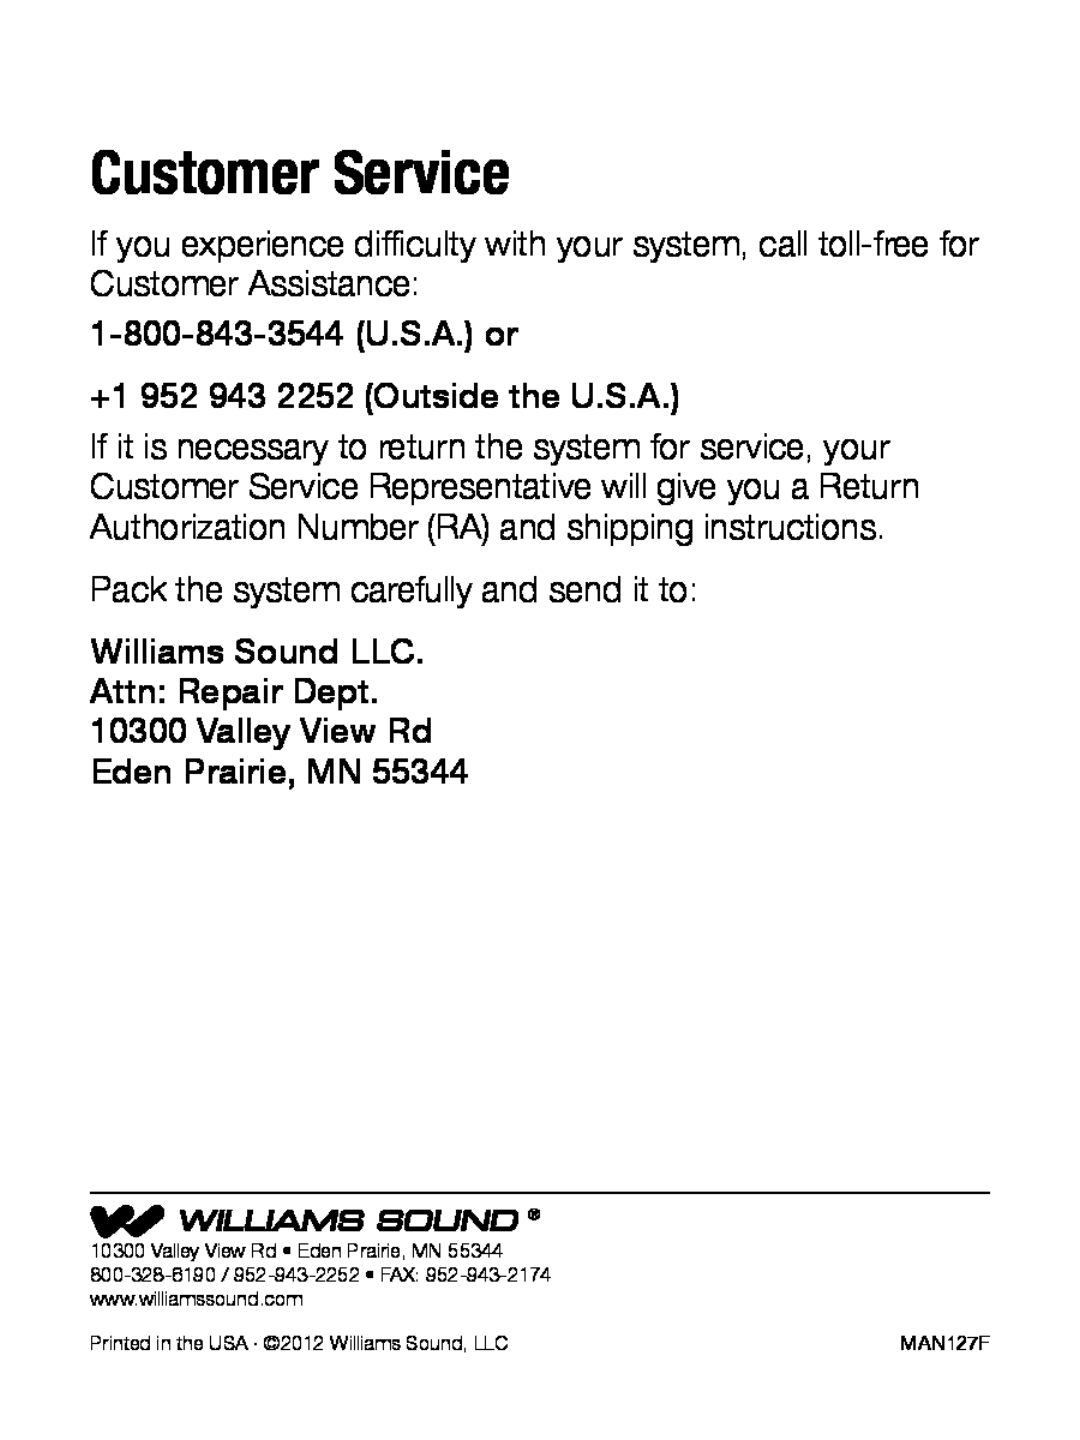 Williams Sound WIR RX22-4 manual Customer Service 